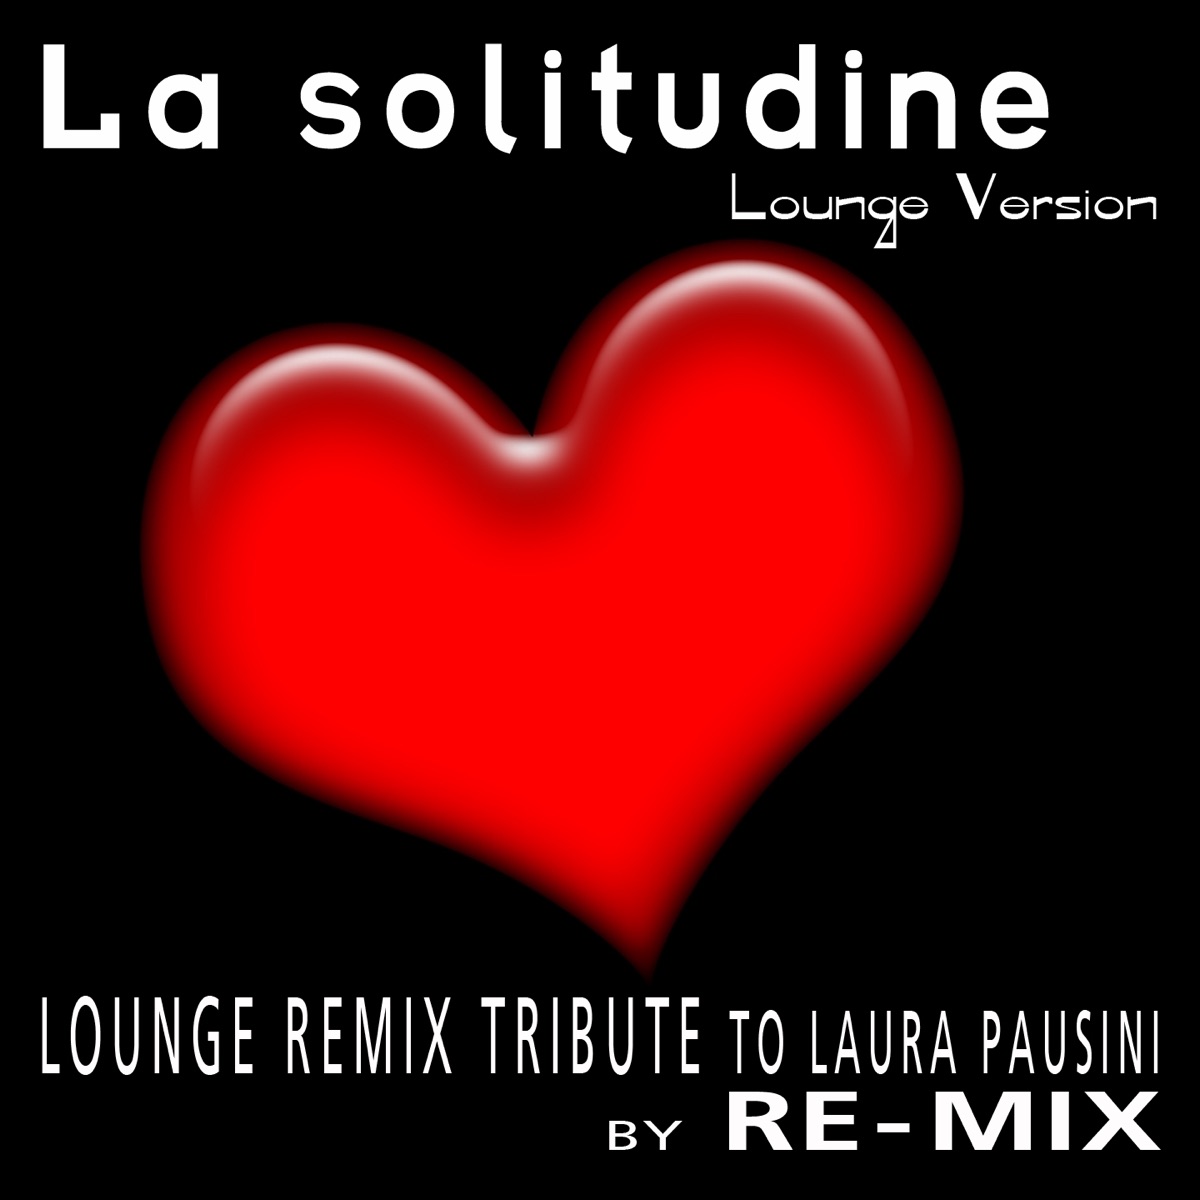 La solitudine: Tribute to Laura Pausini (Dance Remix) - Single by RE-MIX on  Apple Music